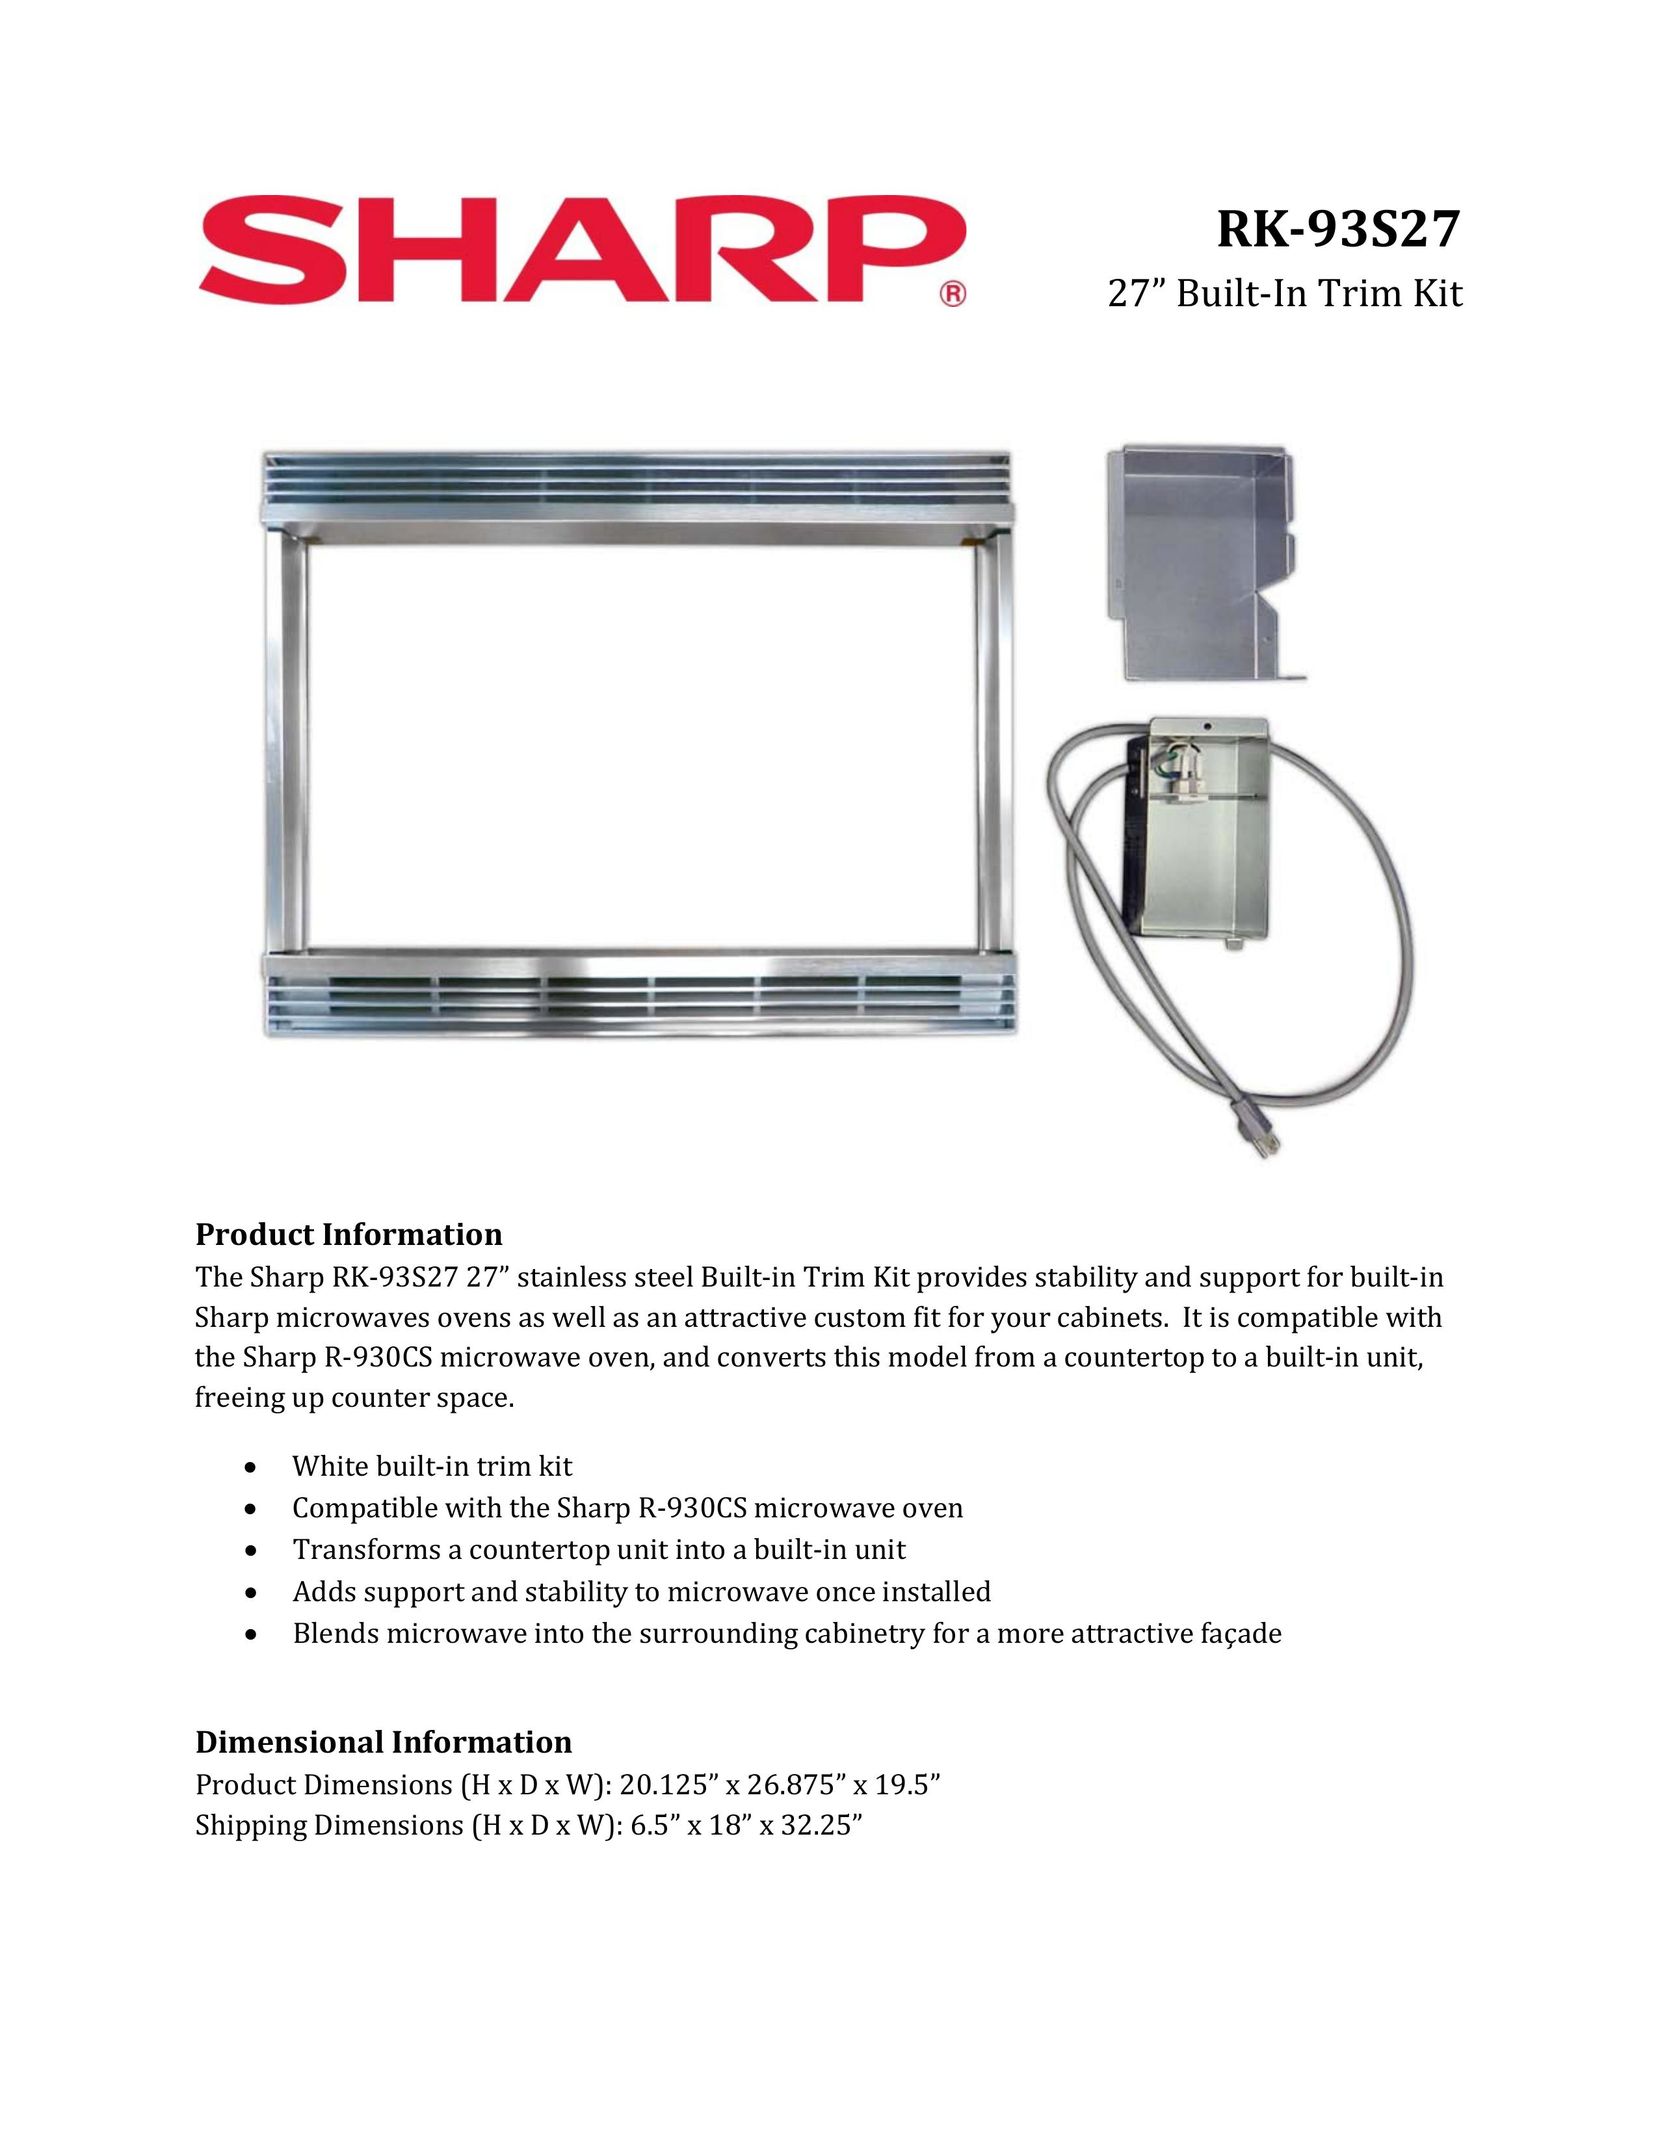 Sharp RK-93S27 Appliance Trim Kit User Manual